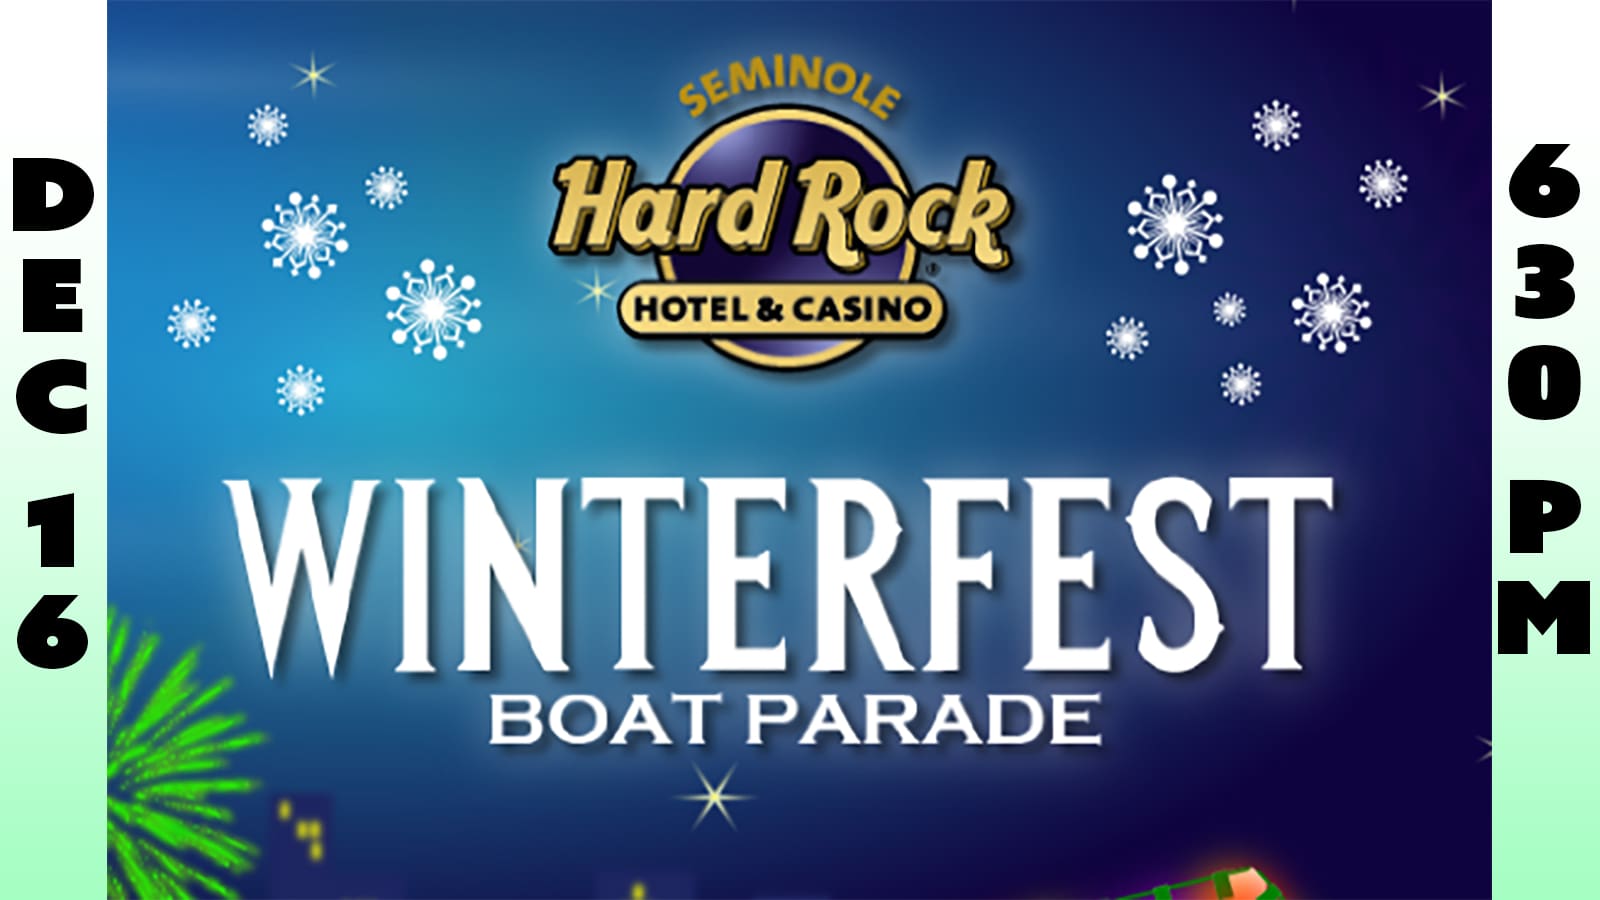 Hardrock-Seminole-Winterfest-Boat-Parade-Banner